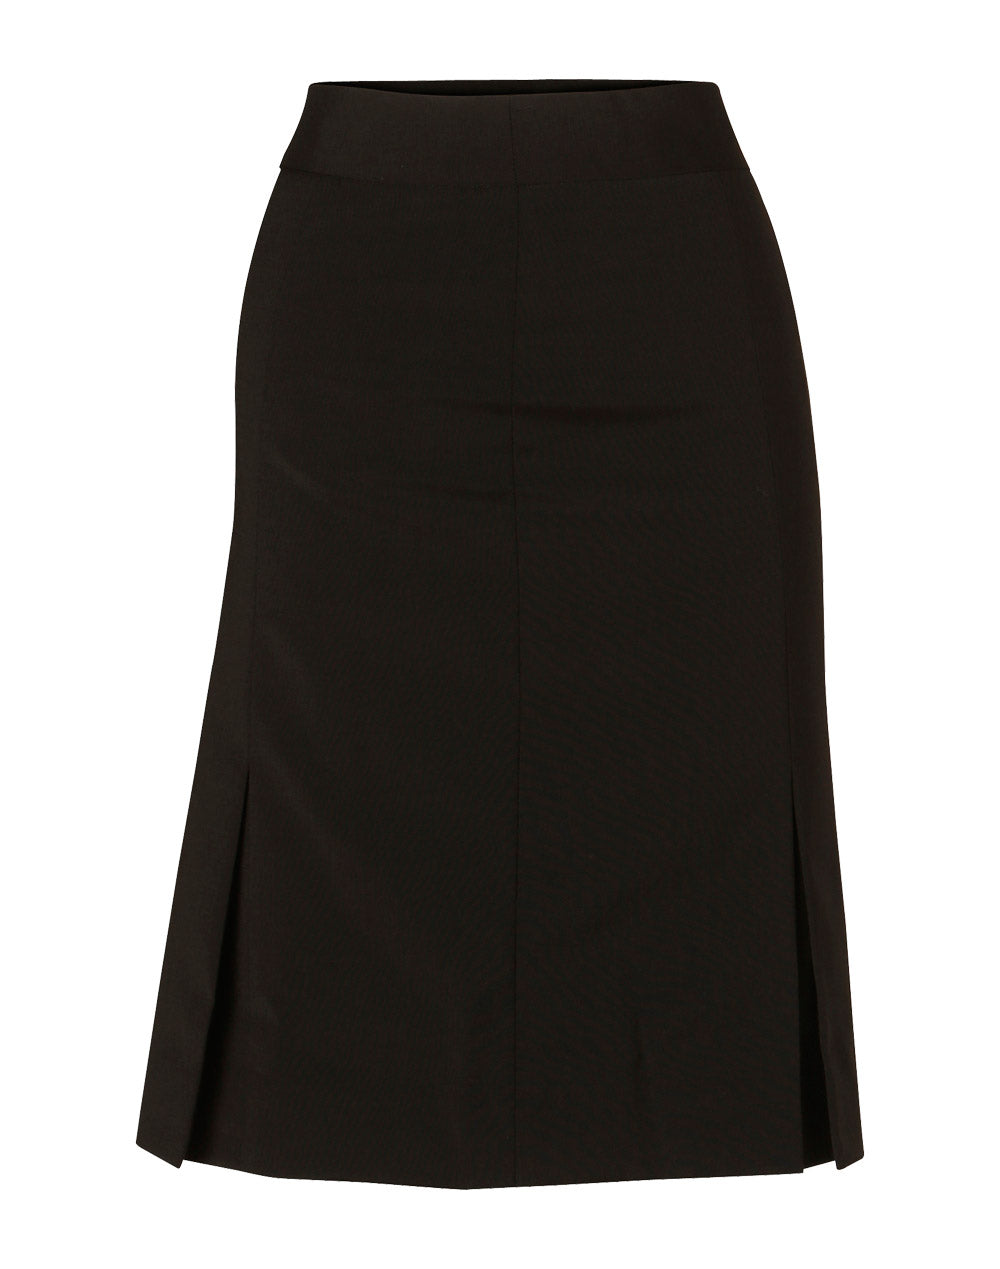 JCM9473 Women's Wool Blend Stretch Pleated Skirt